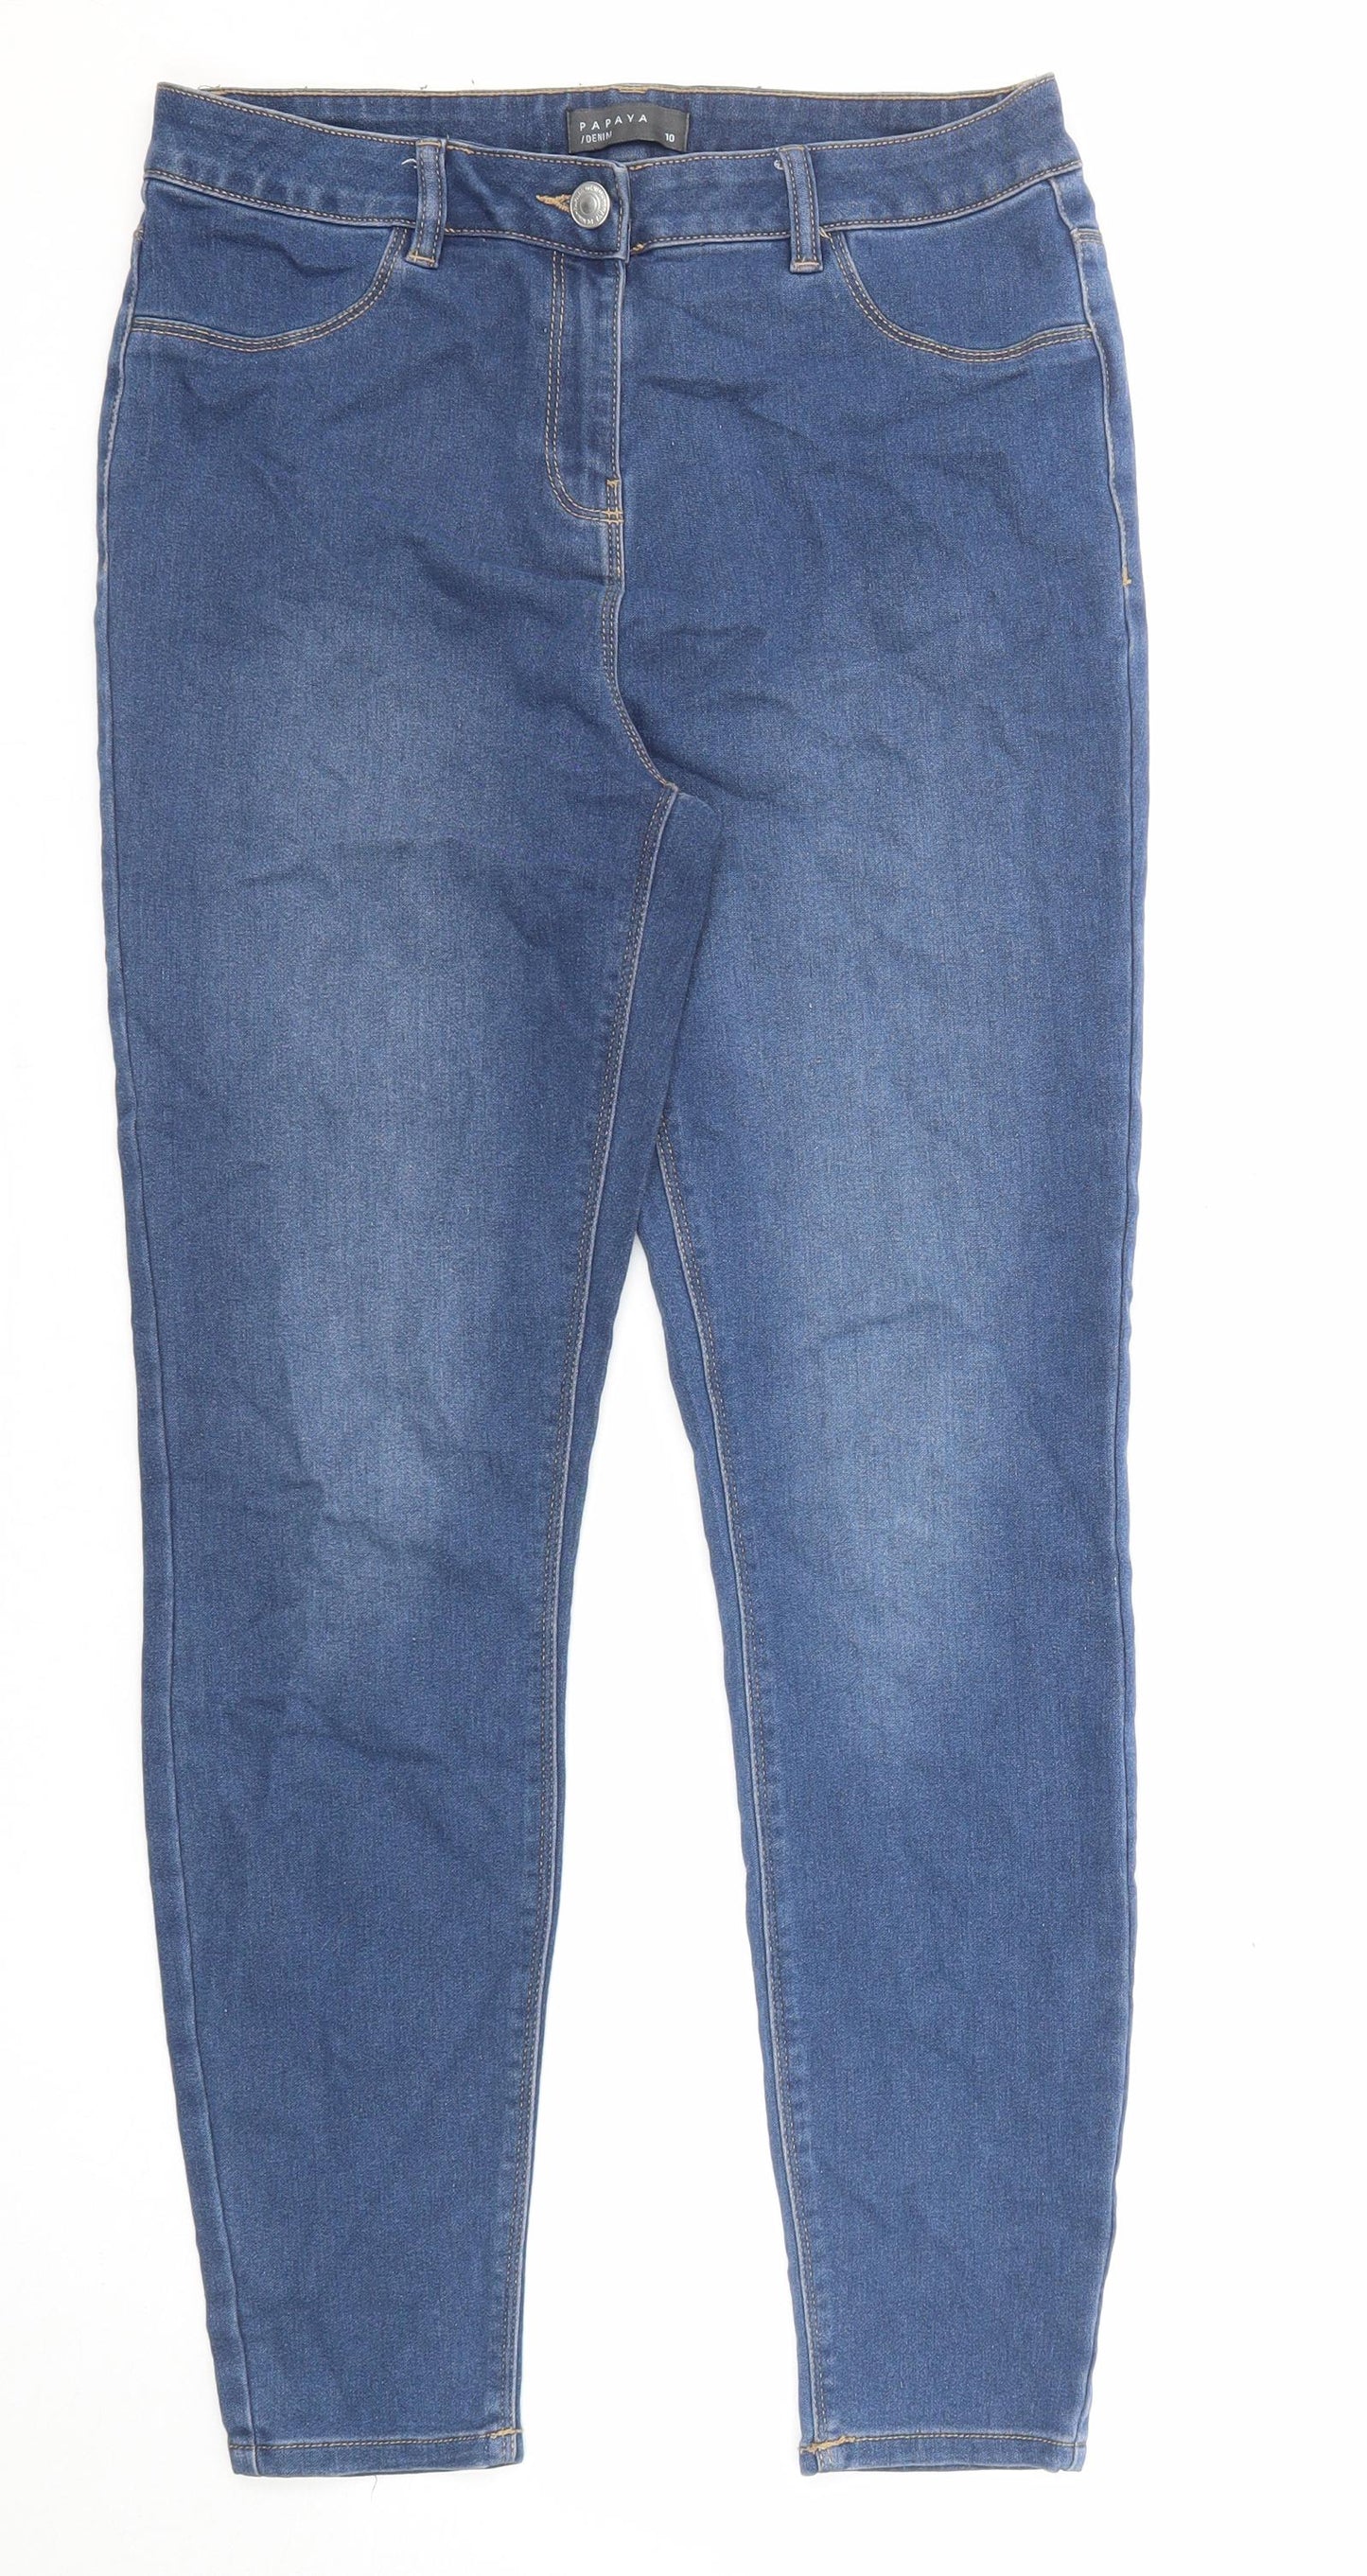 Papaya Womens Blue Cotton Skinny Jeans Size 10 L27 in Regular Zip